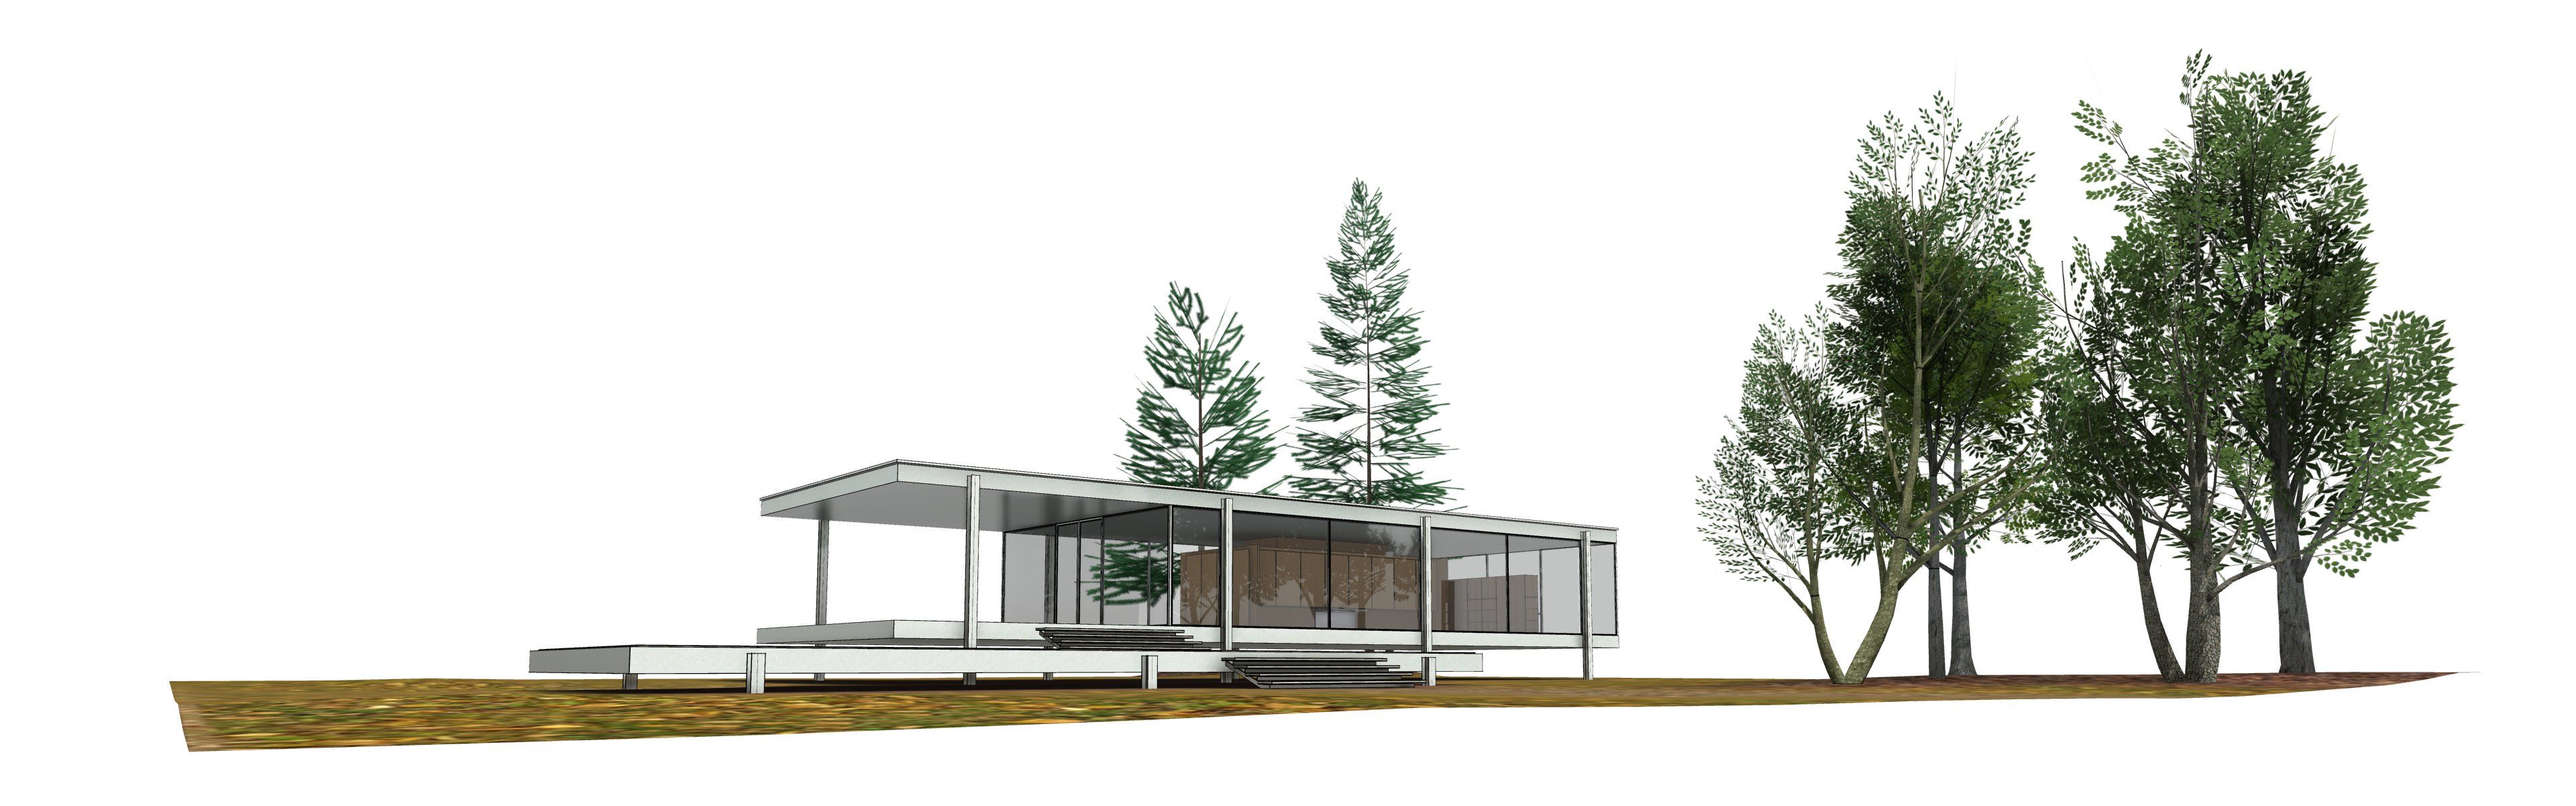 edg3d-farnsworth-house-trees_lightup(no scene)_2015-09-15_1435.jpg